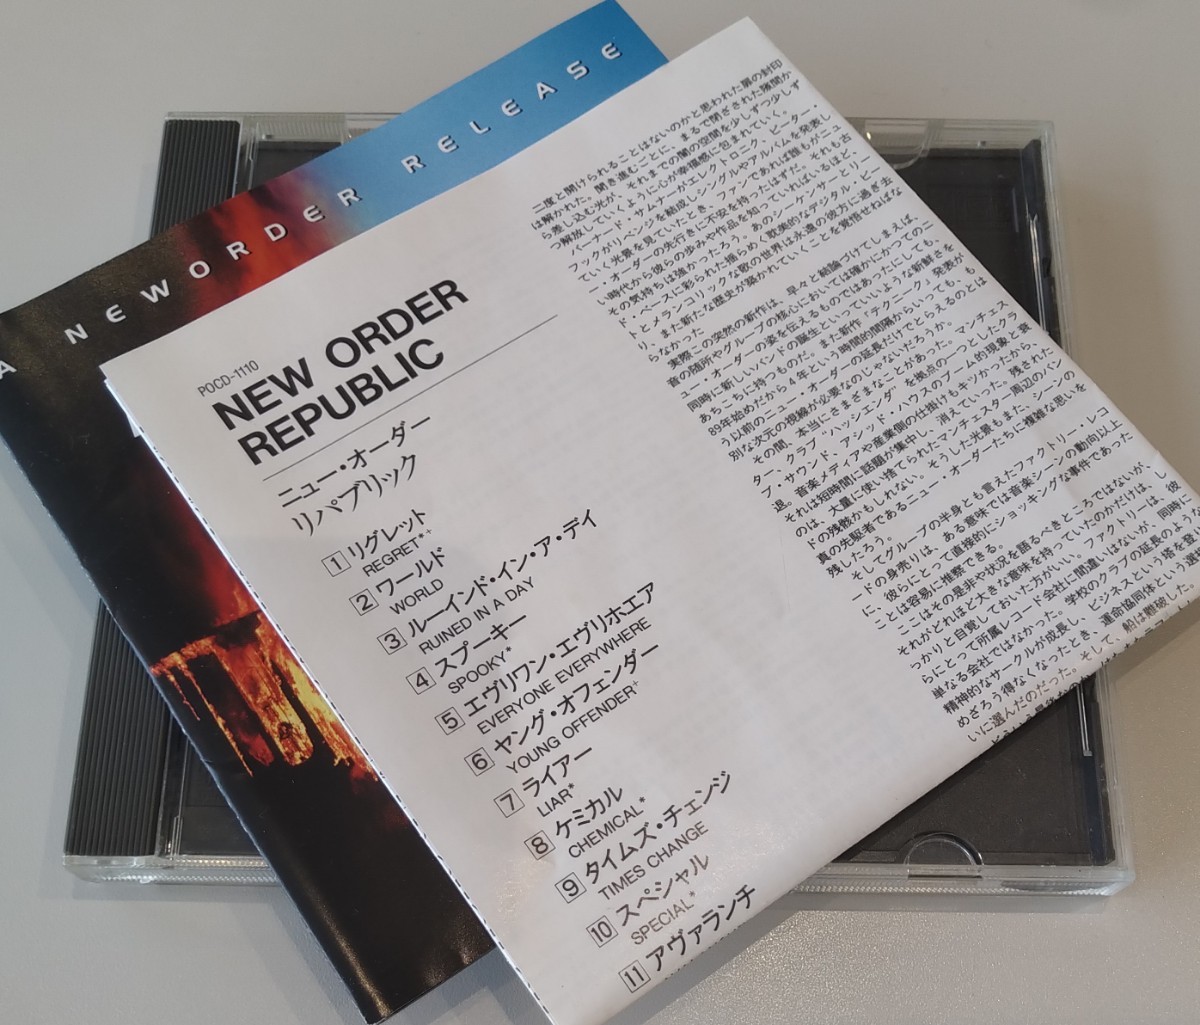 New Order Republic снят с производства записано в Японии б/у CD новый * заказ lipa желтохвост k лодка la сбор POCD-1110 2500 иен запись 